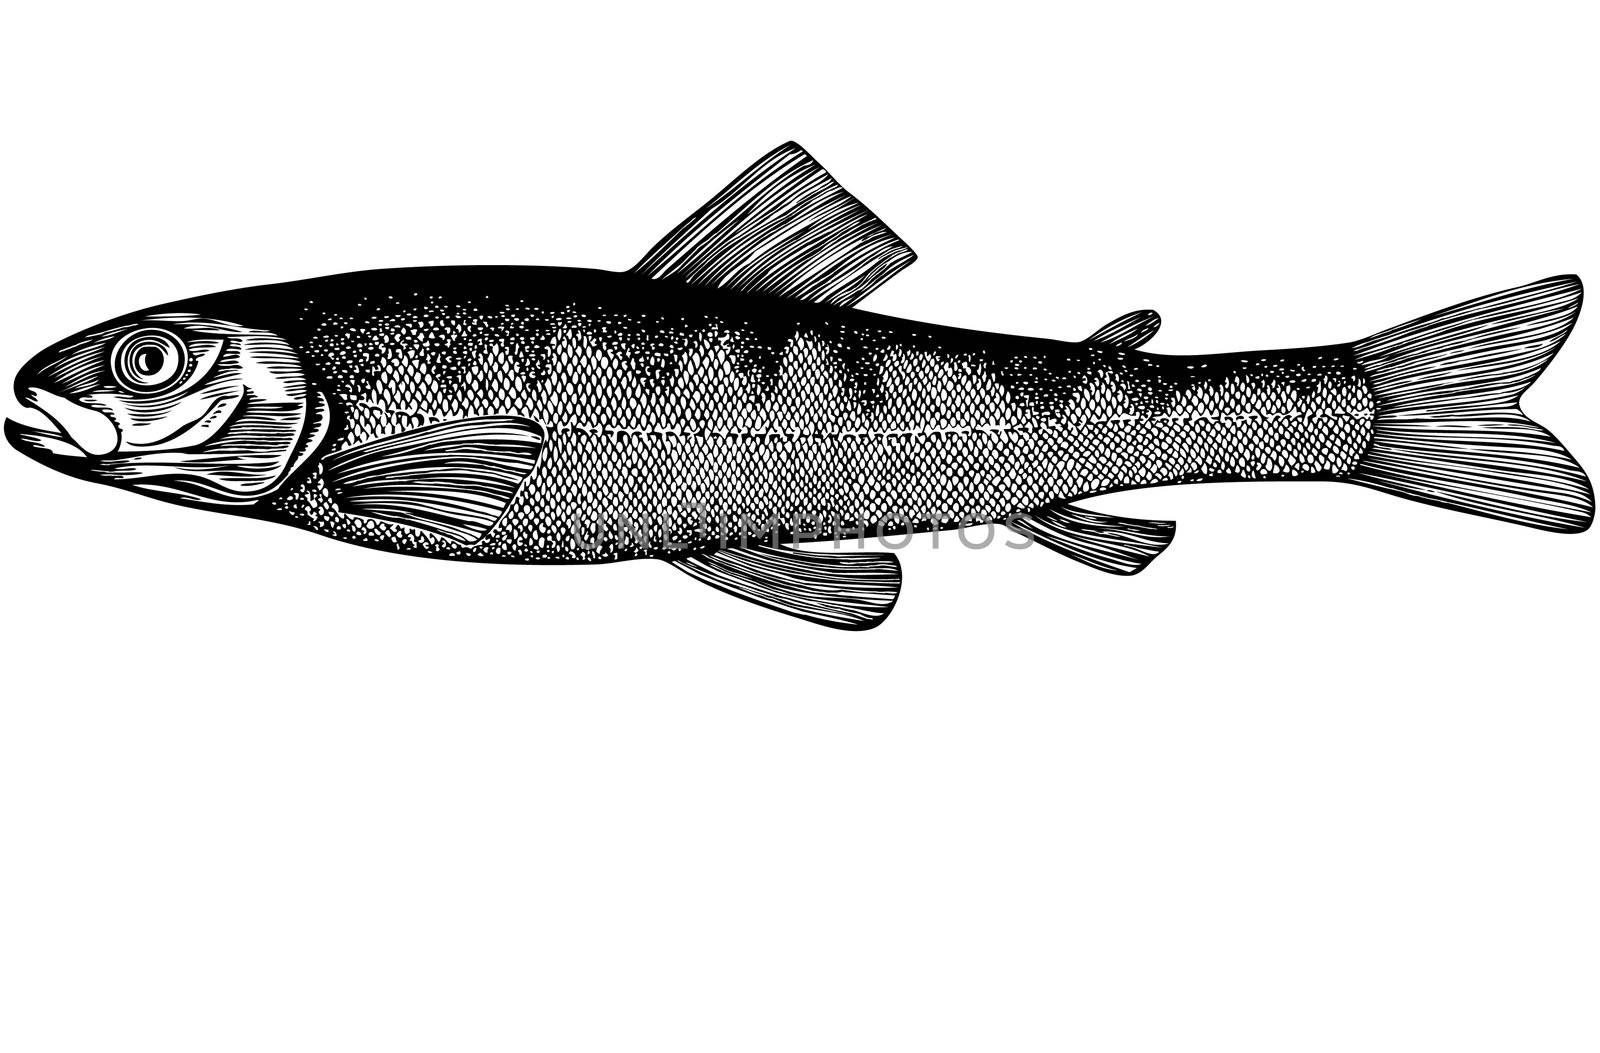 Fish Salmon parr Illustration by selhin